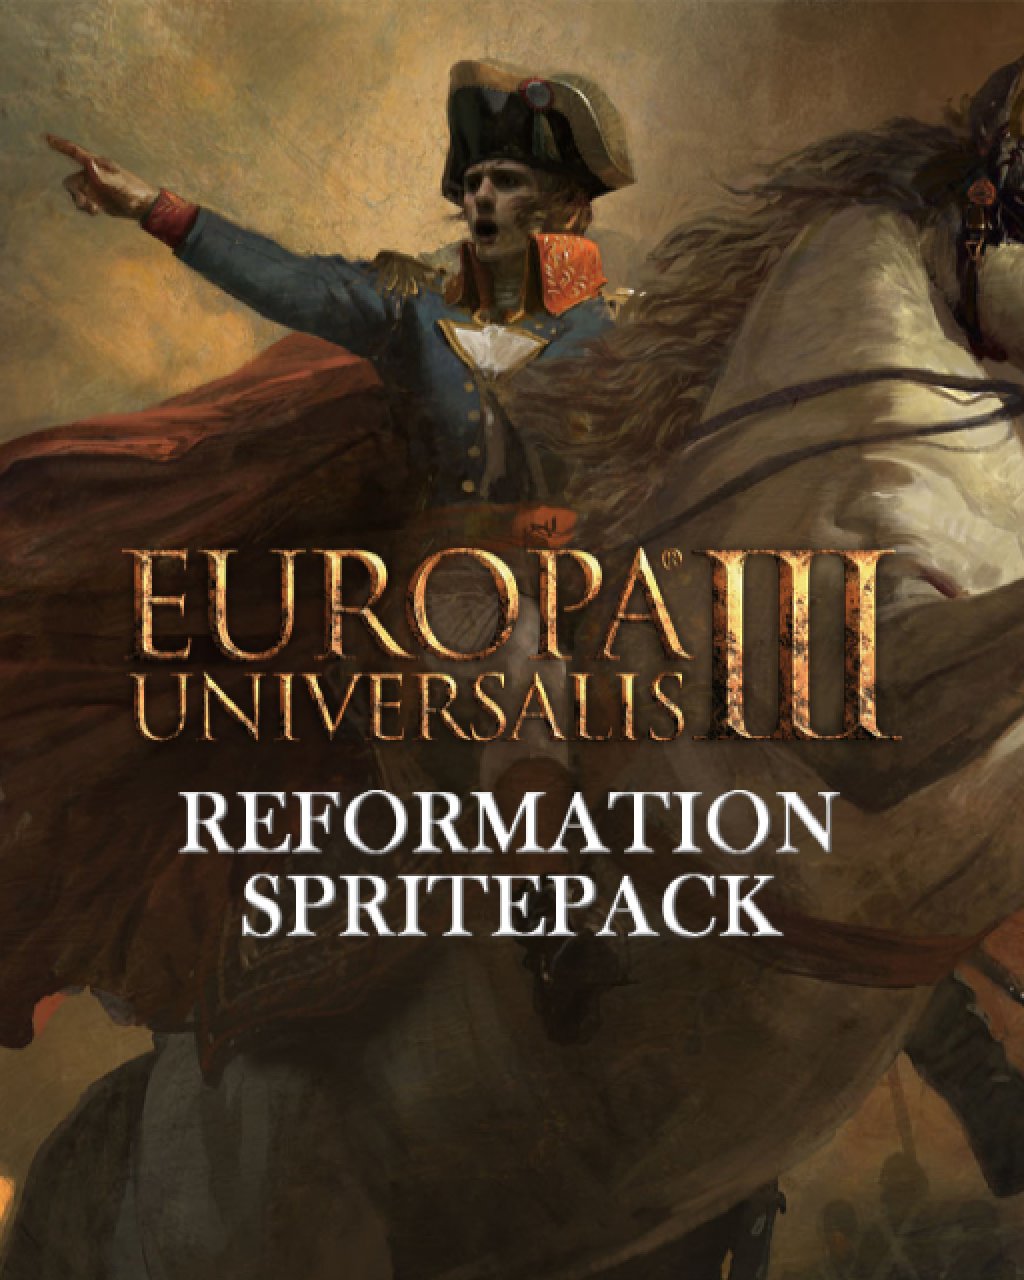 Europa Universalis III Reformation SpritePack